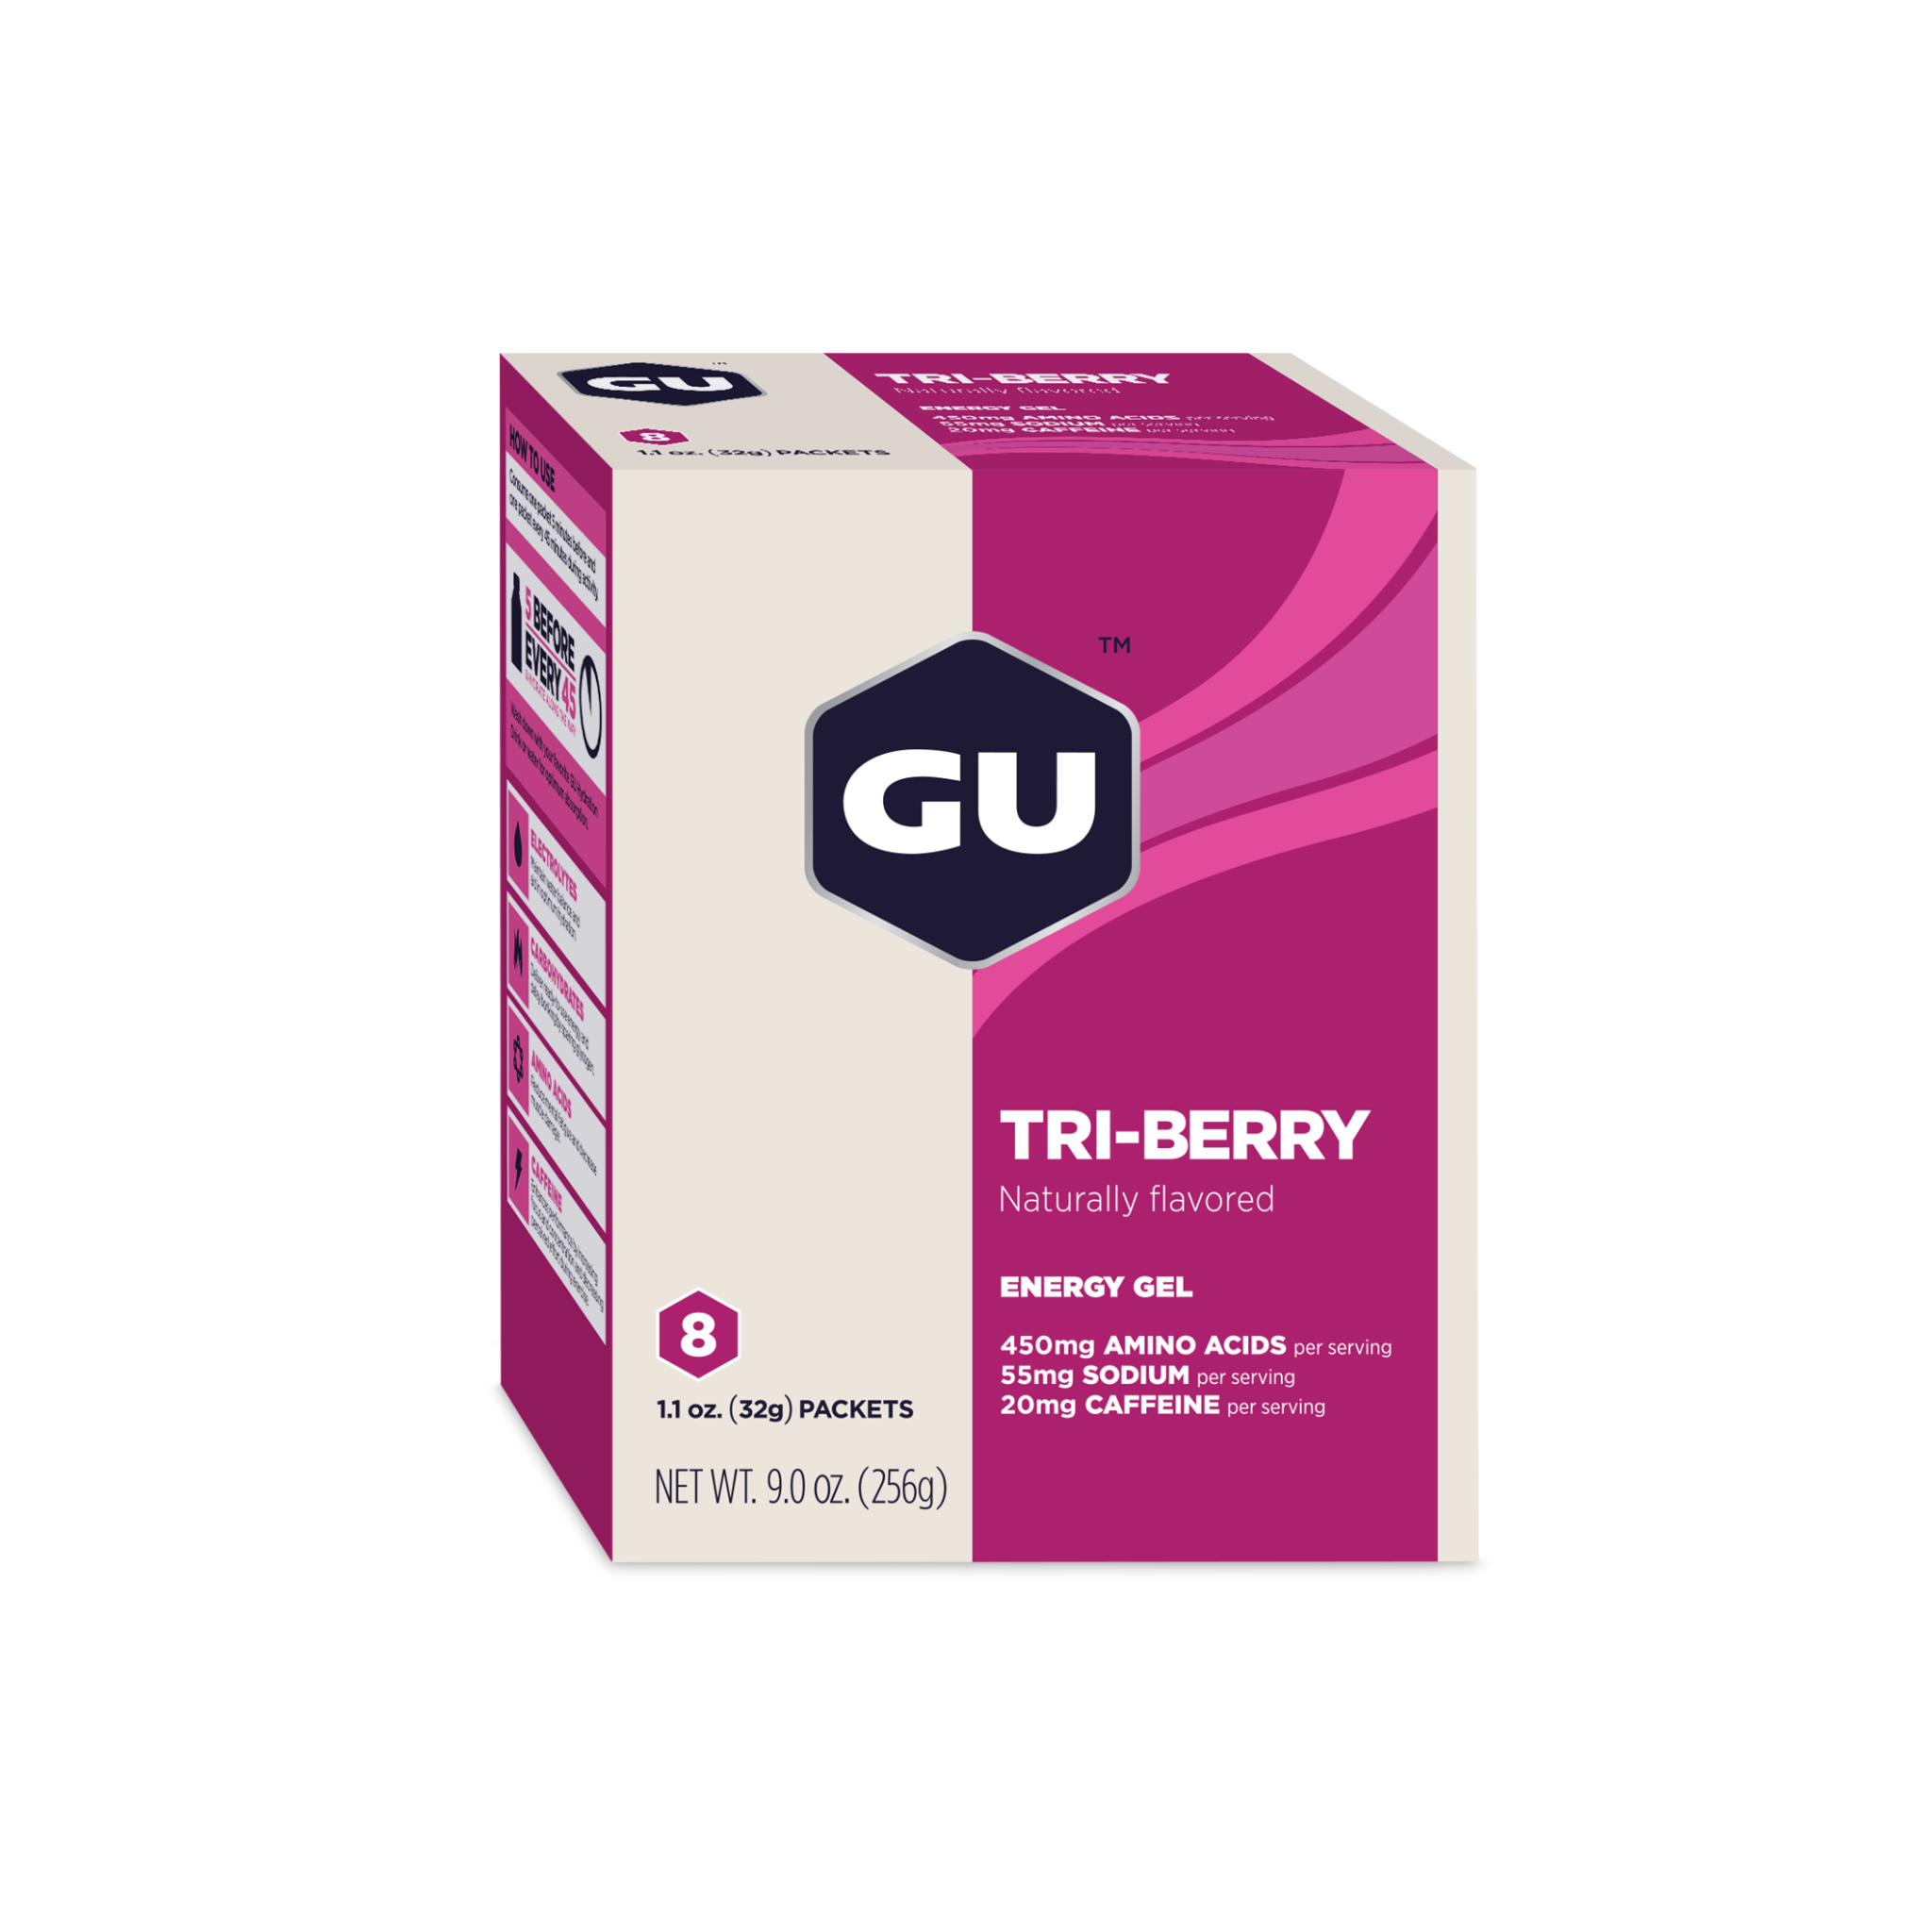 GU SPORTS GU ENERGY GEL - 8 PACK BOX TRIBERRY